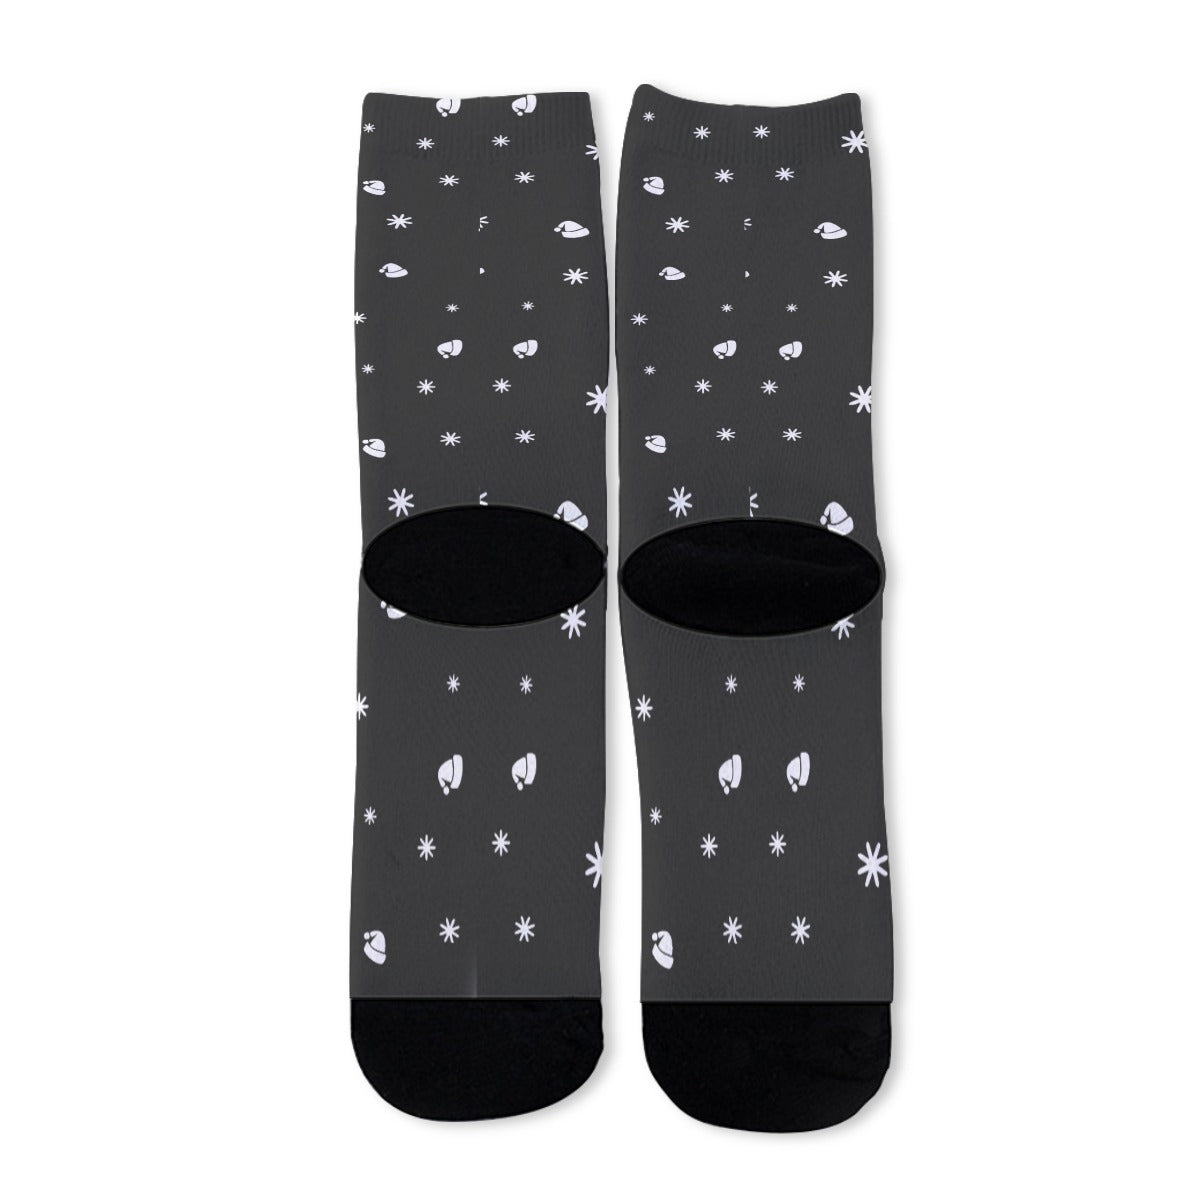 Unisex Long Socks - Black - Hats and Snowflakes - Festive Style